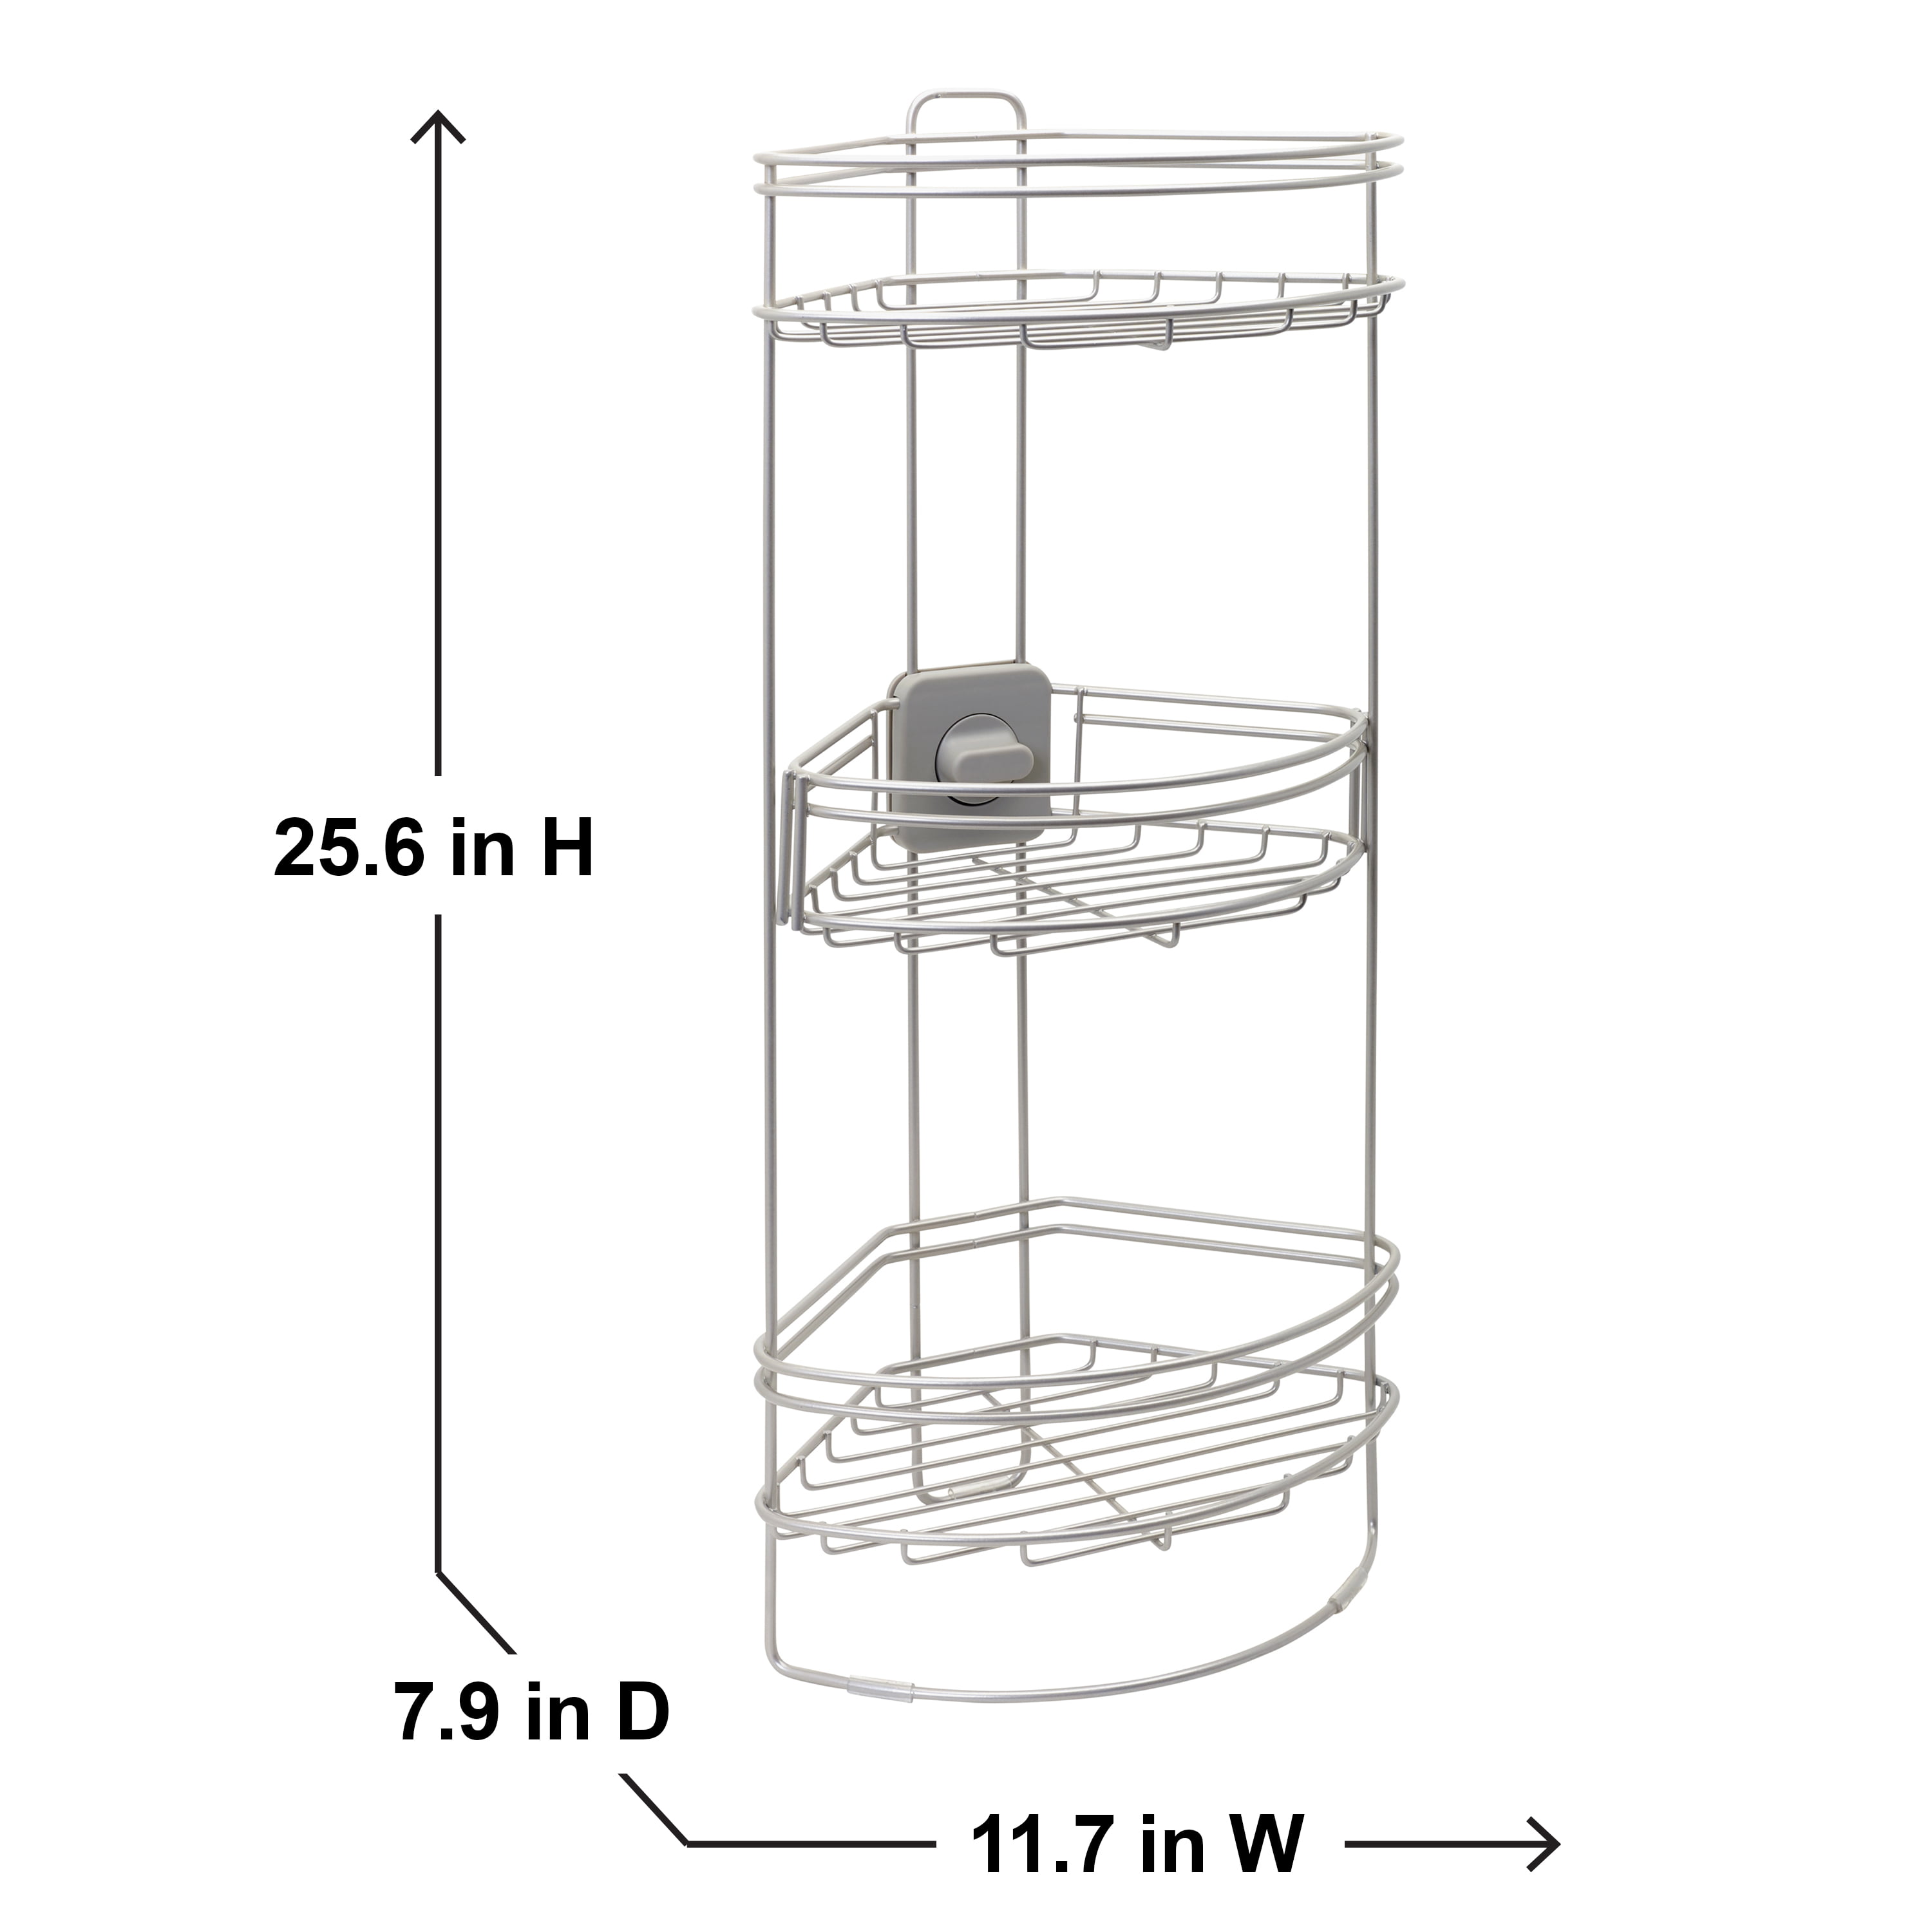 Satin Nickel Corner Shower Basket, Better Homes & Gardens Rust-Resistant Power Grip Pro, 1-Shelf, Suction or Adhesive Mount, Size: Corner Basket